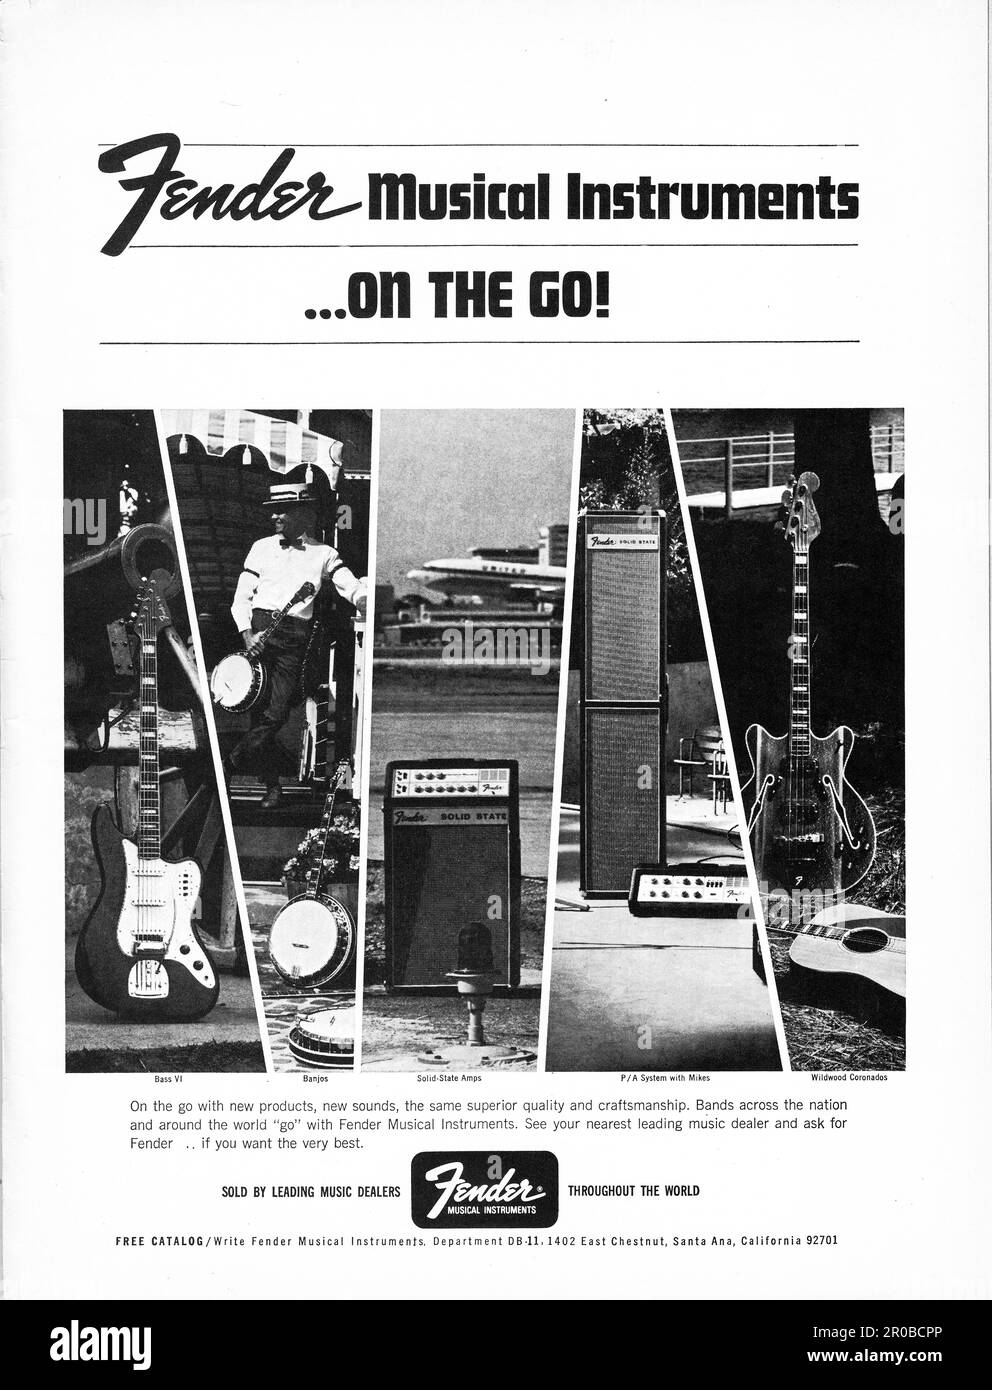 1960s magazine advertisement advertising Goddard's Long Term